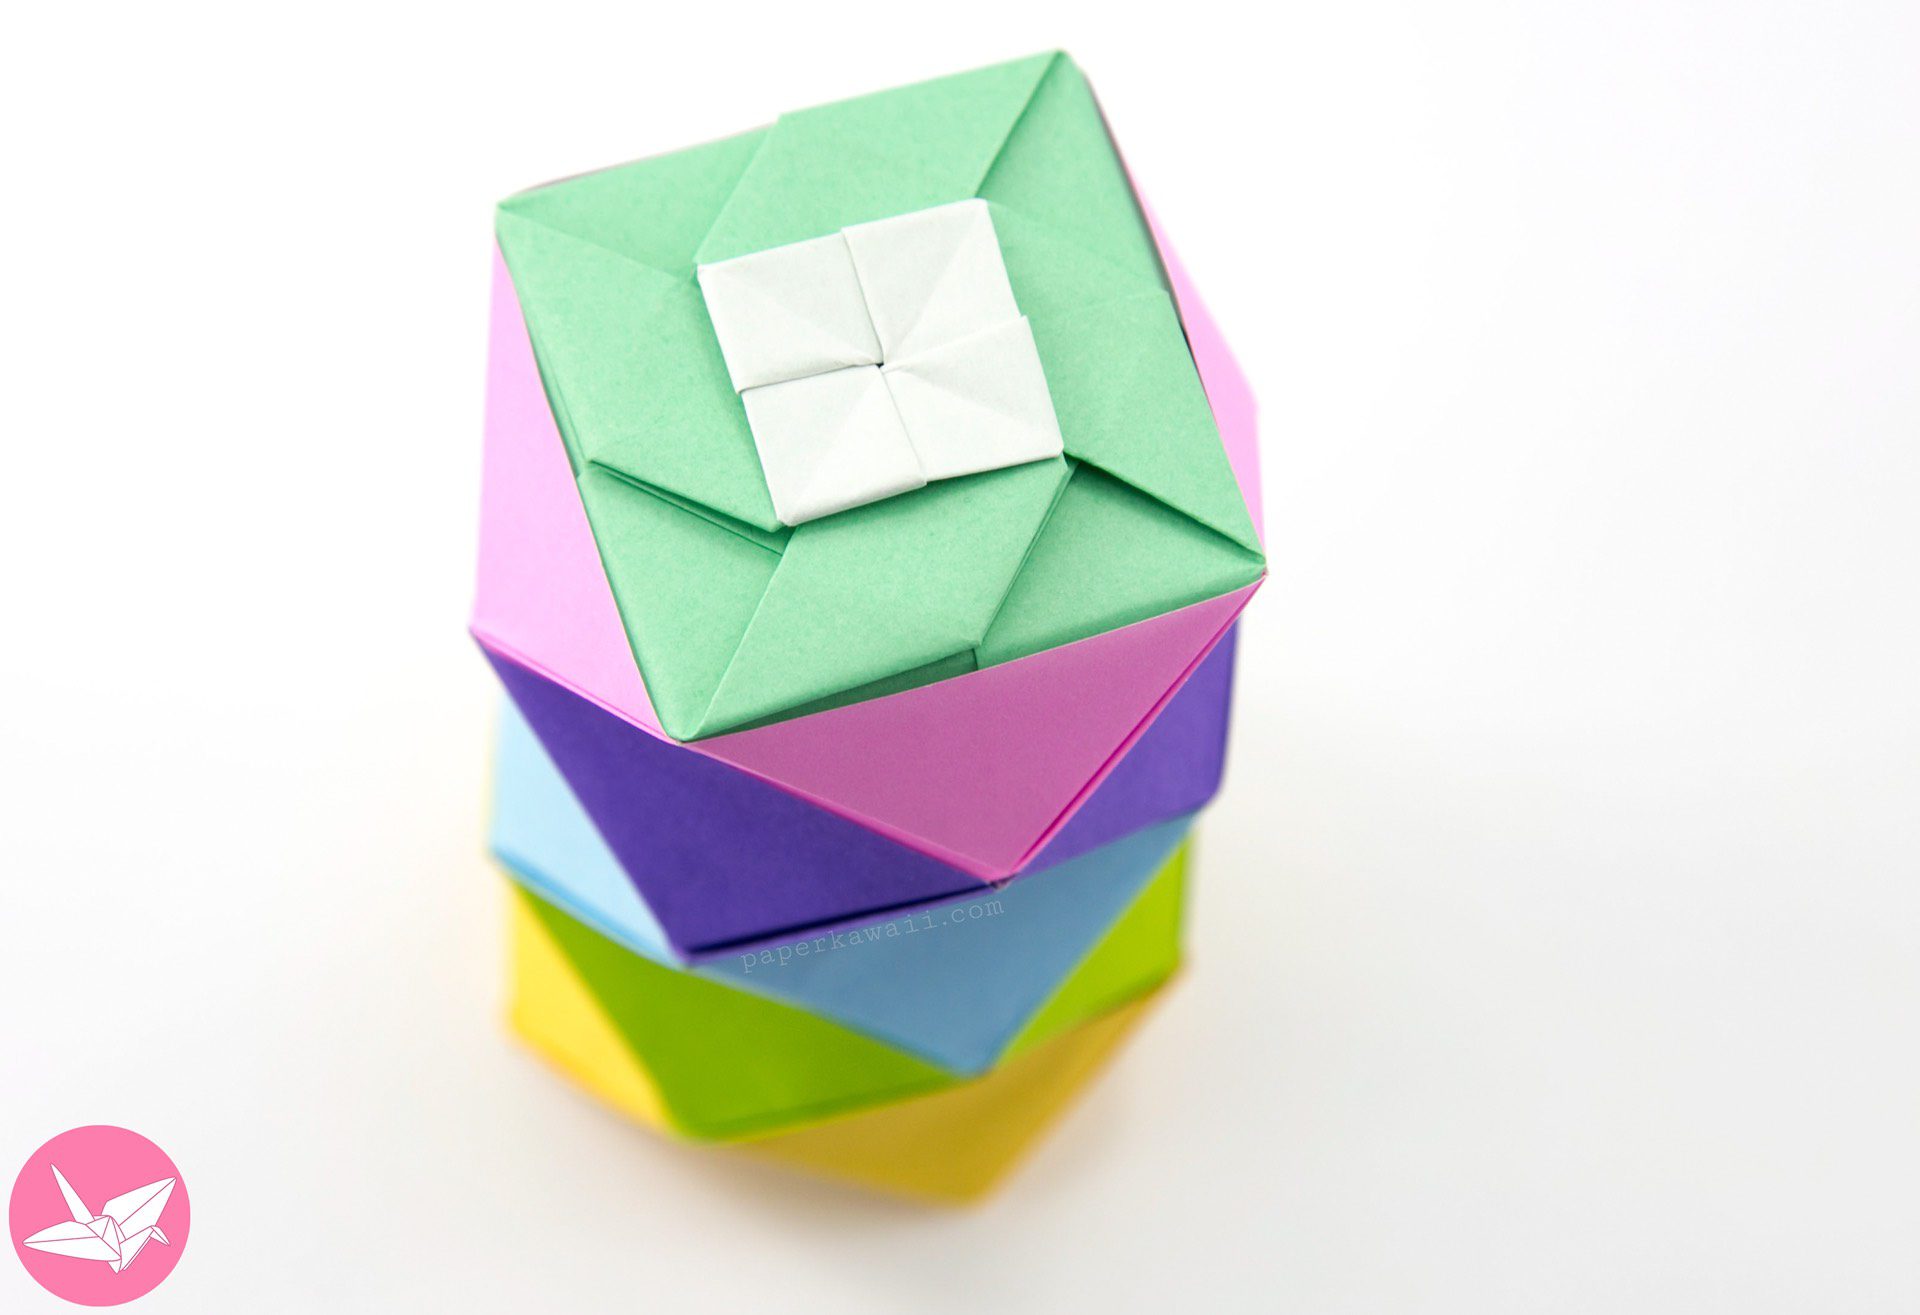 Simple Origami interlocking box using 6 x 6 patterned paper 